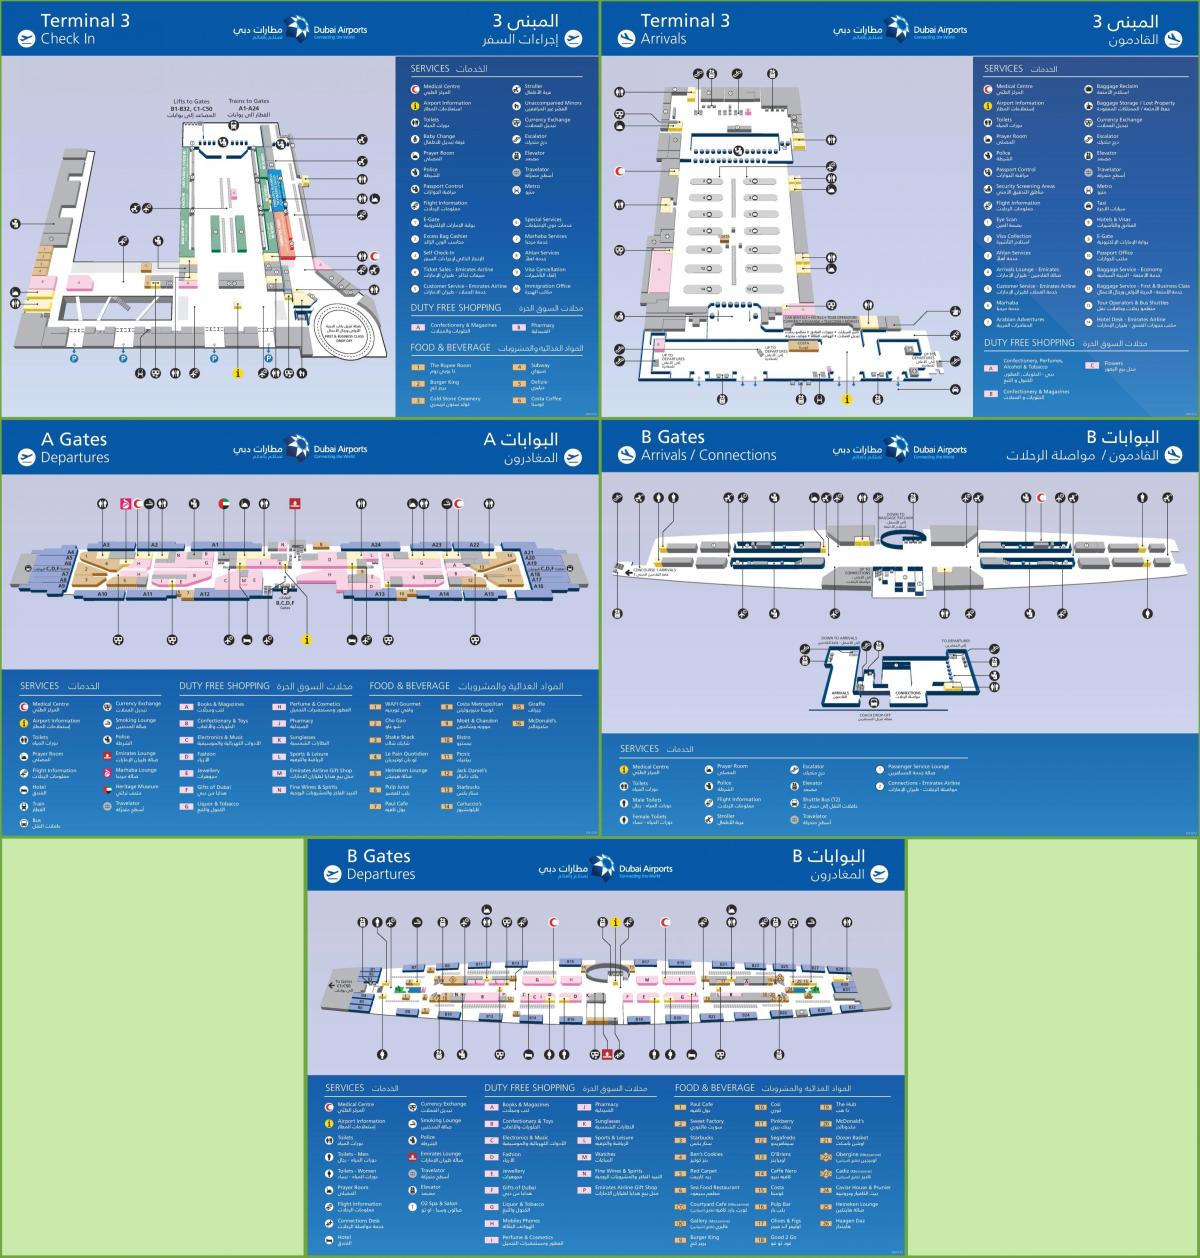 Dubai international airport terminal 3 map